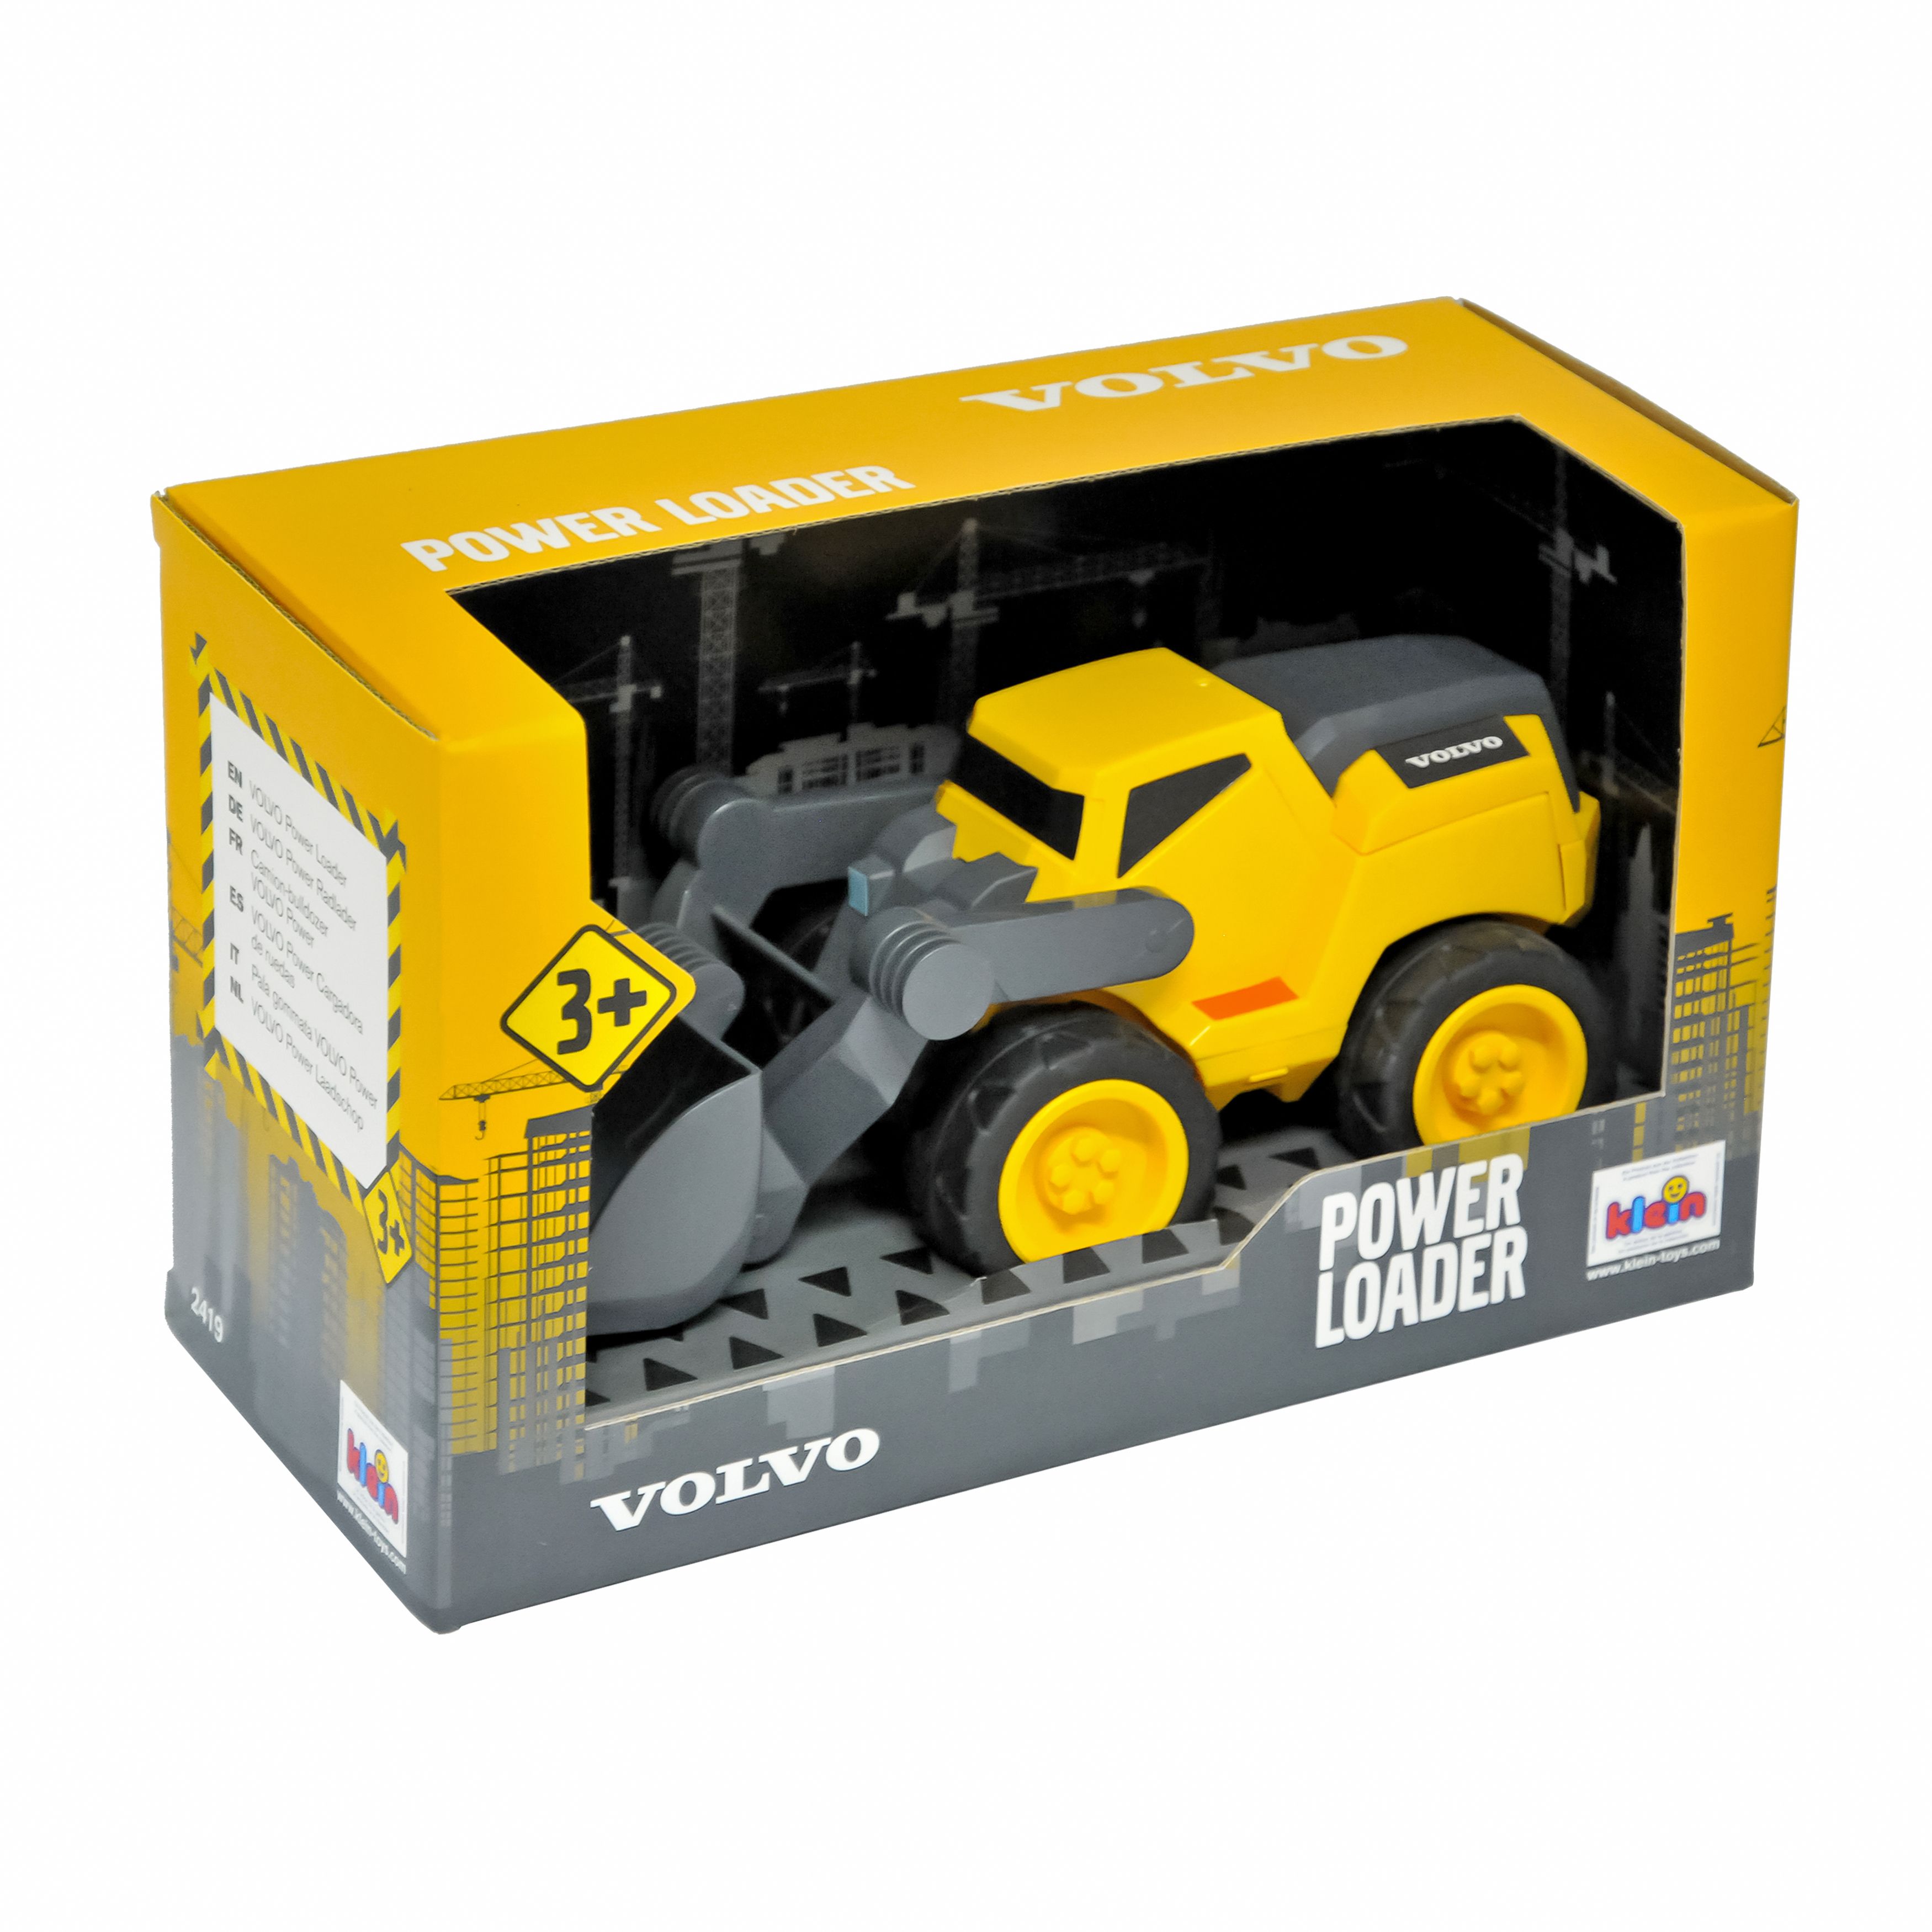 Погрузчик Klein Volvo, в коробке, желтый (2419) - фото 1